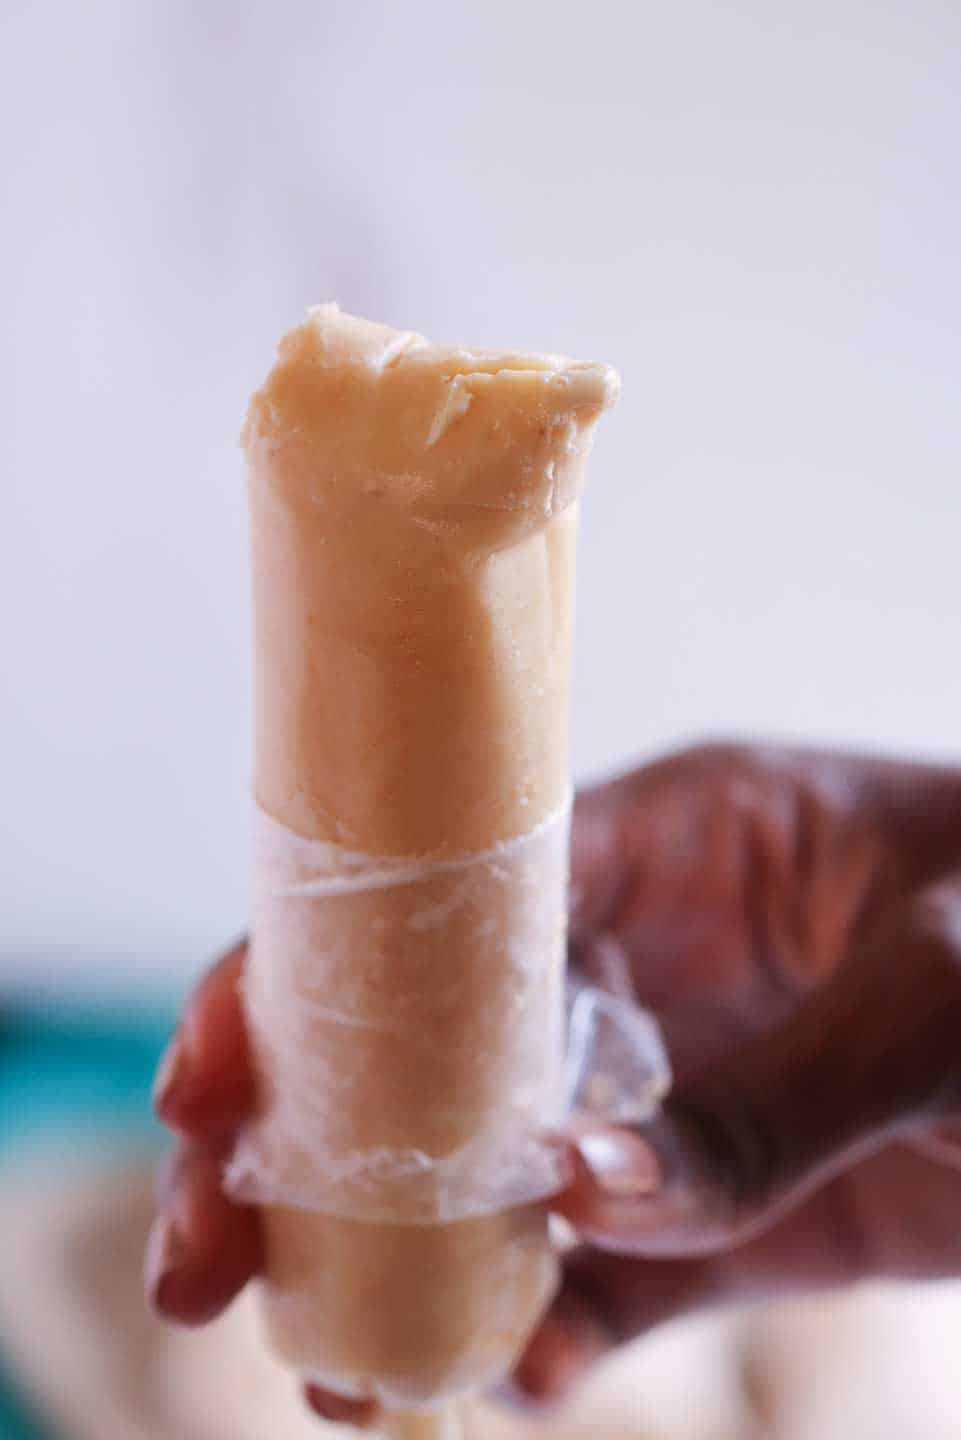 upclose shot of frozen custard dessert with plastic peeled back